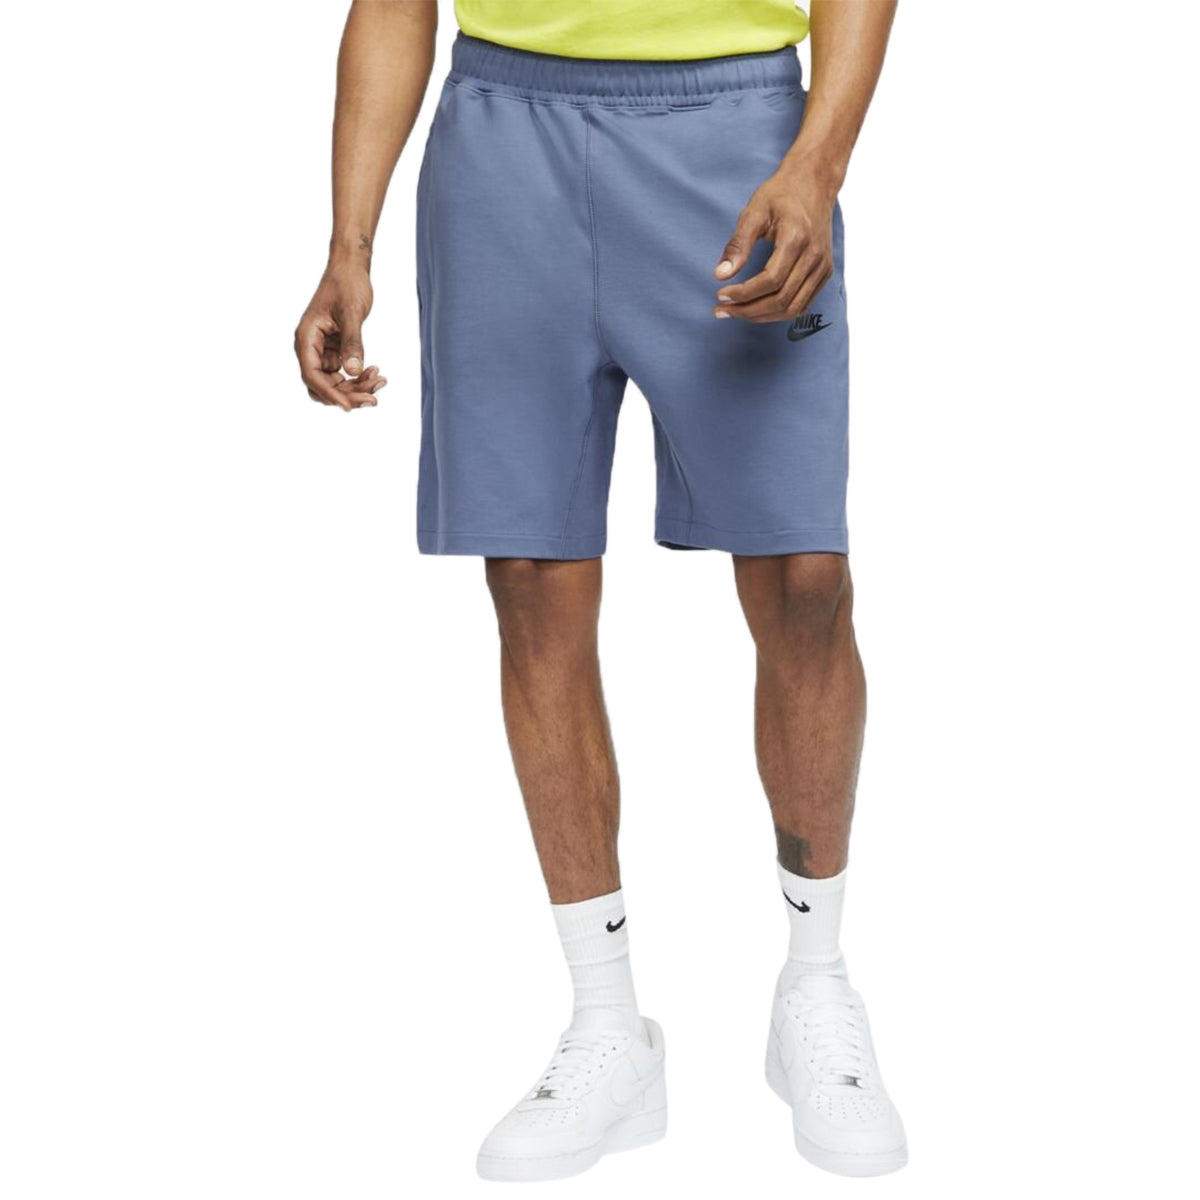 Nike Sportswear Shorts Mens Style : Cj4284